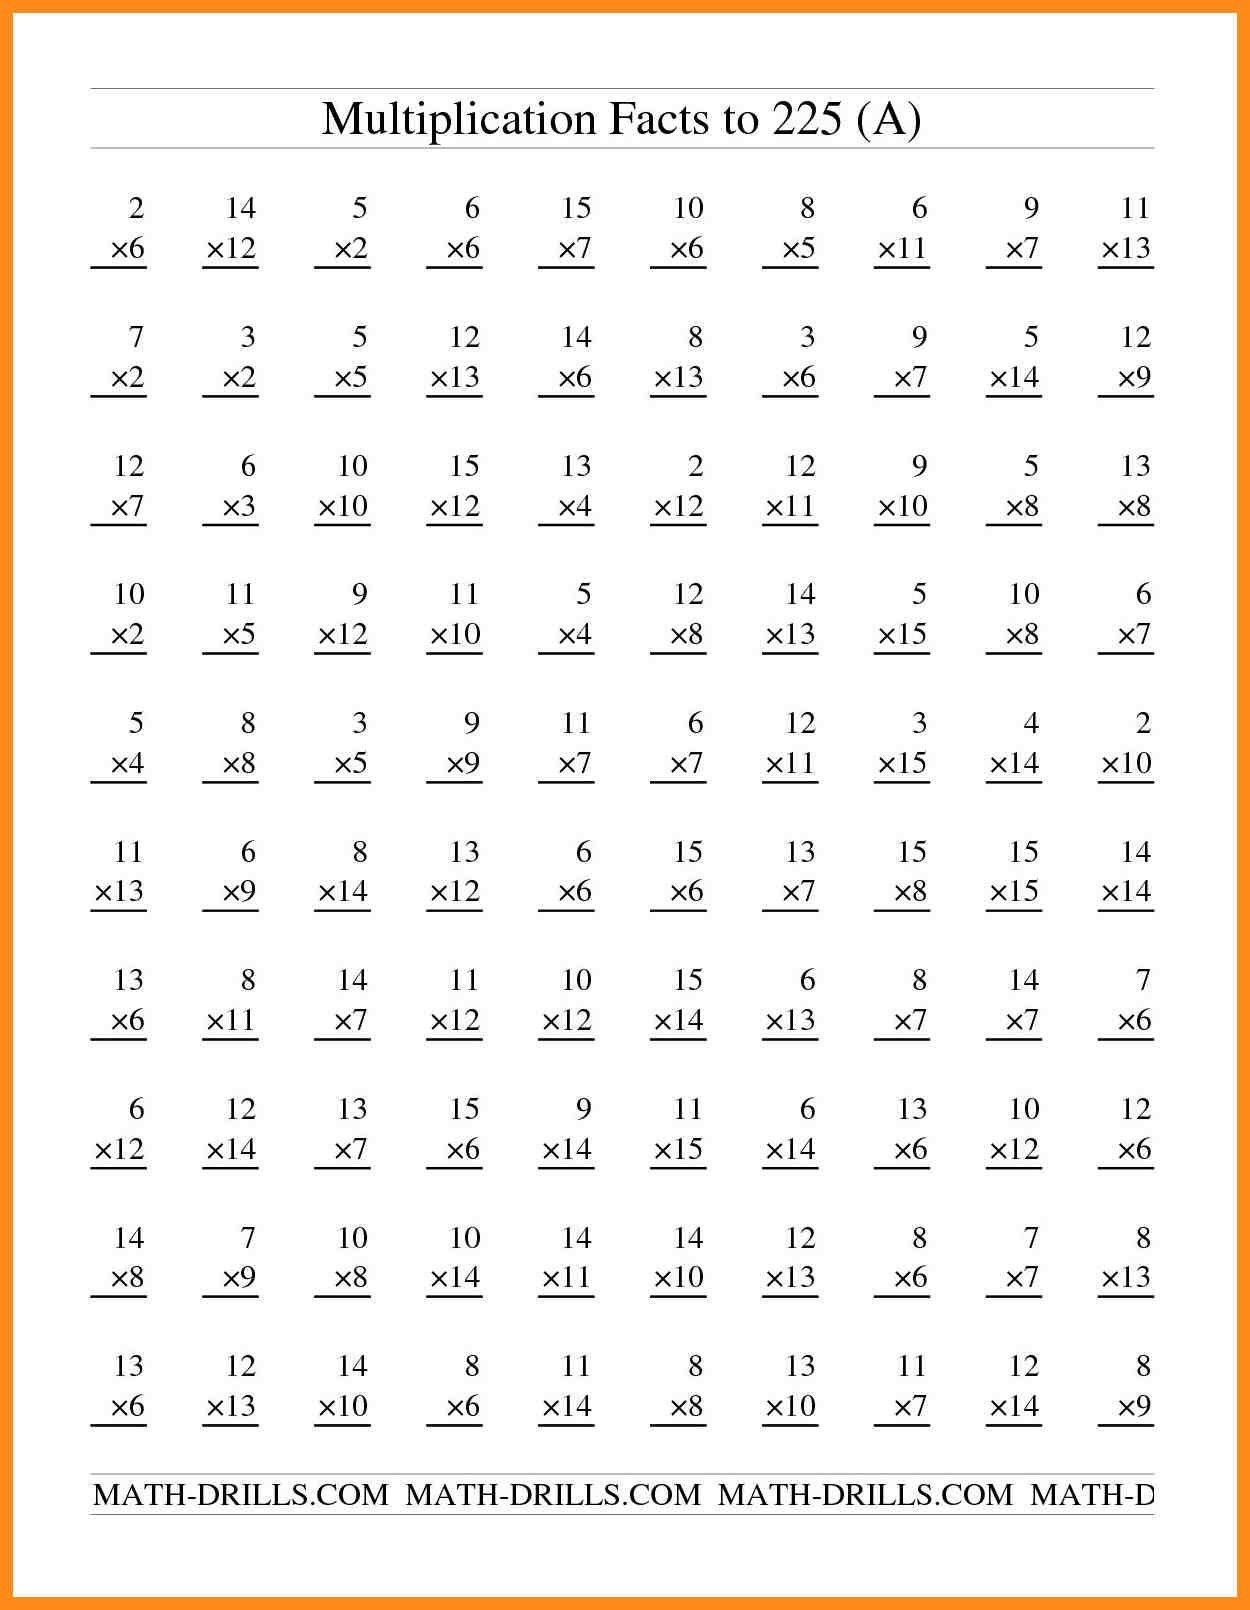 Multiplication Worksheets For Grade 5 Free Valid Grade with Multiplication Worksheets Year 5 Pdf